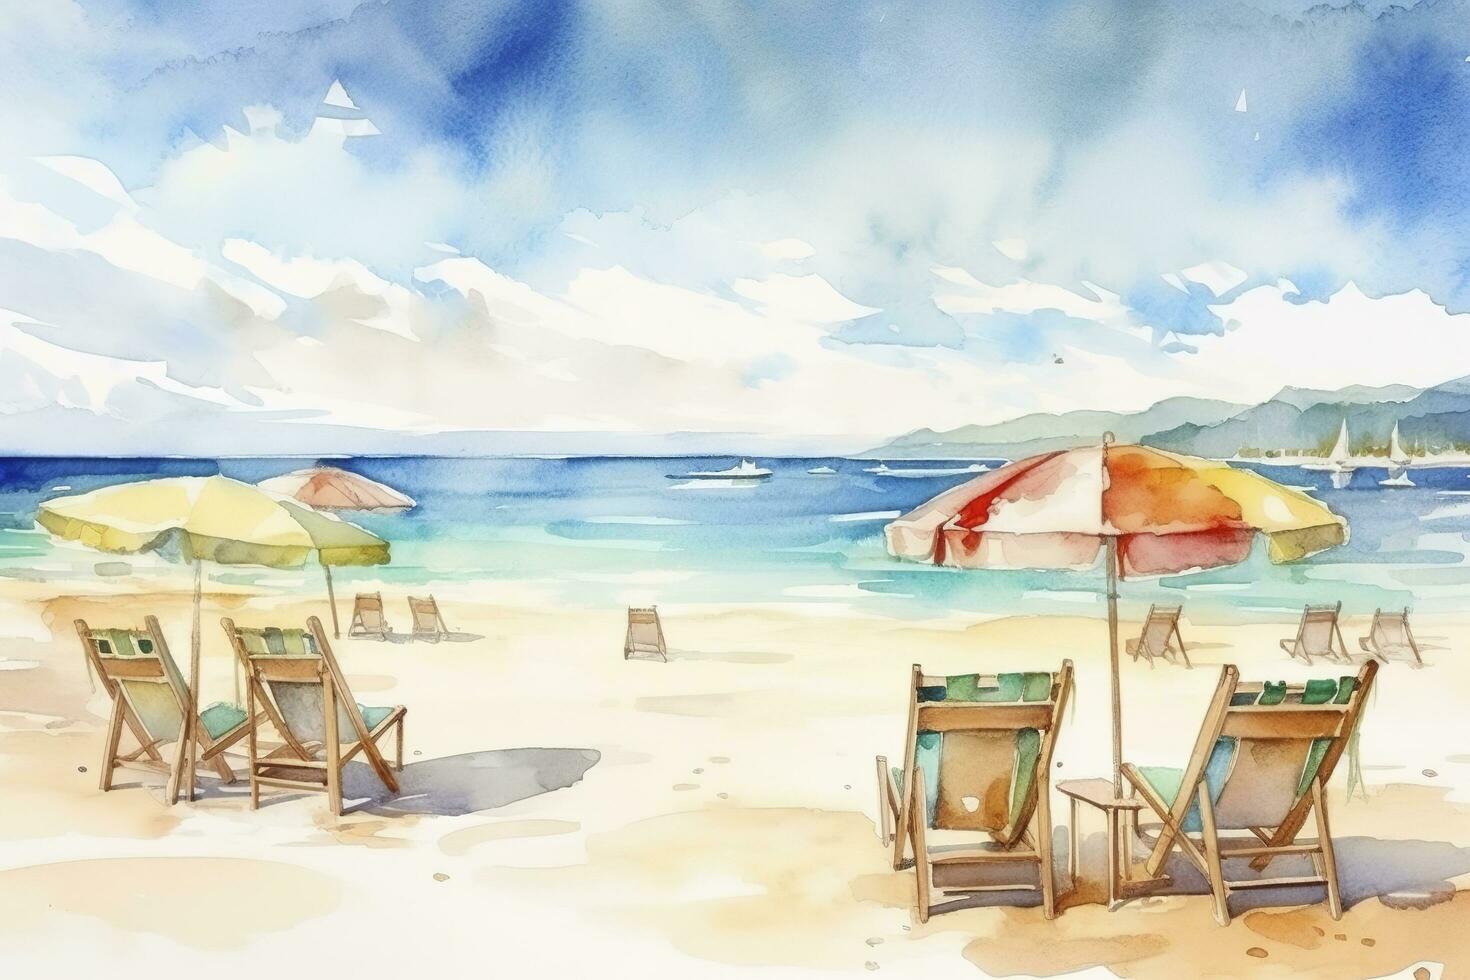 mooi strand spandoek. wit zand, stoelen, en paraplu reizen toerisme breed panorama achtergrond concept. verbazingwekkend strand waterverf landschap waterverf schilderen, genereren ai foto